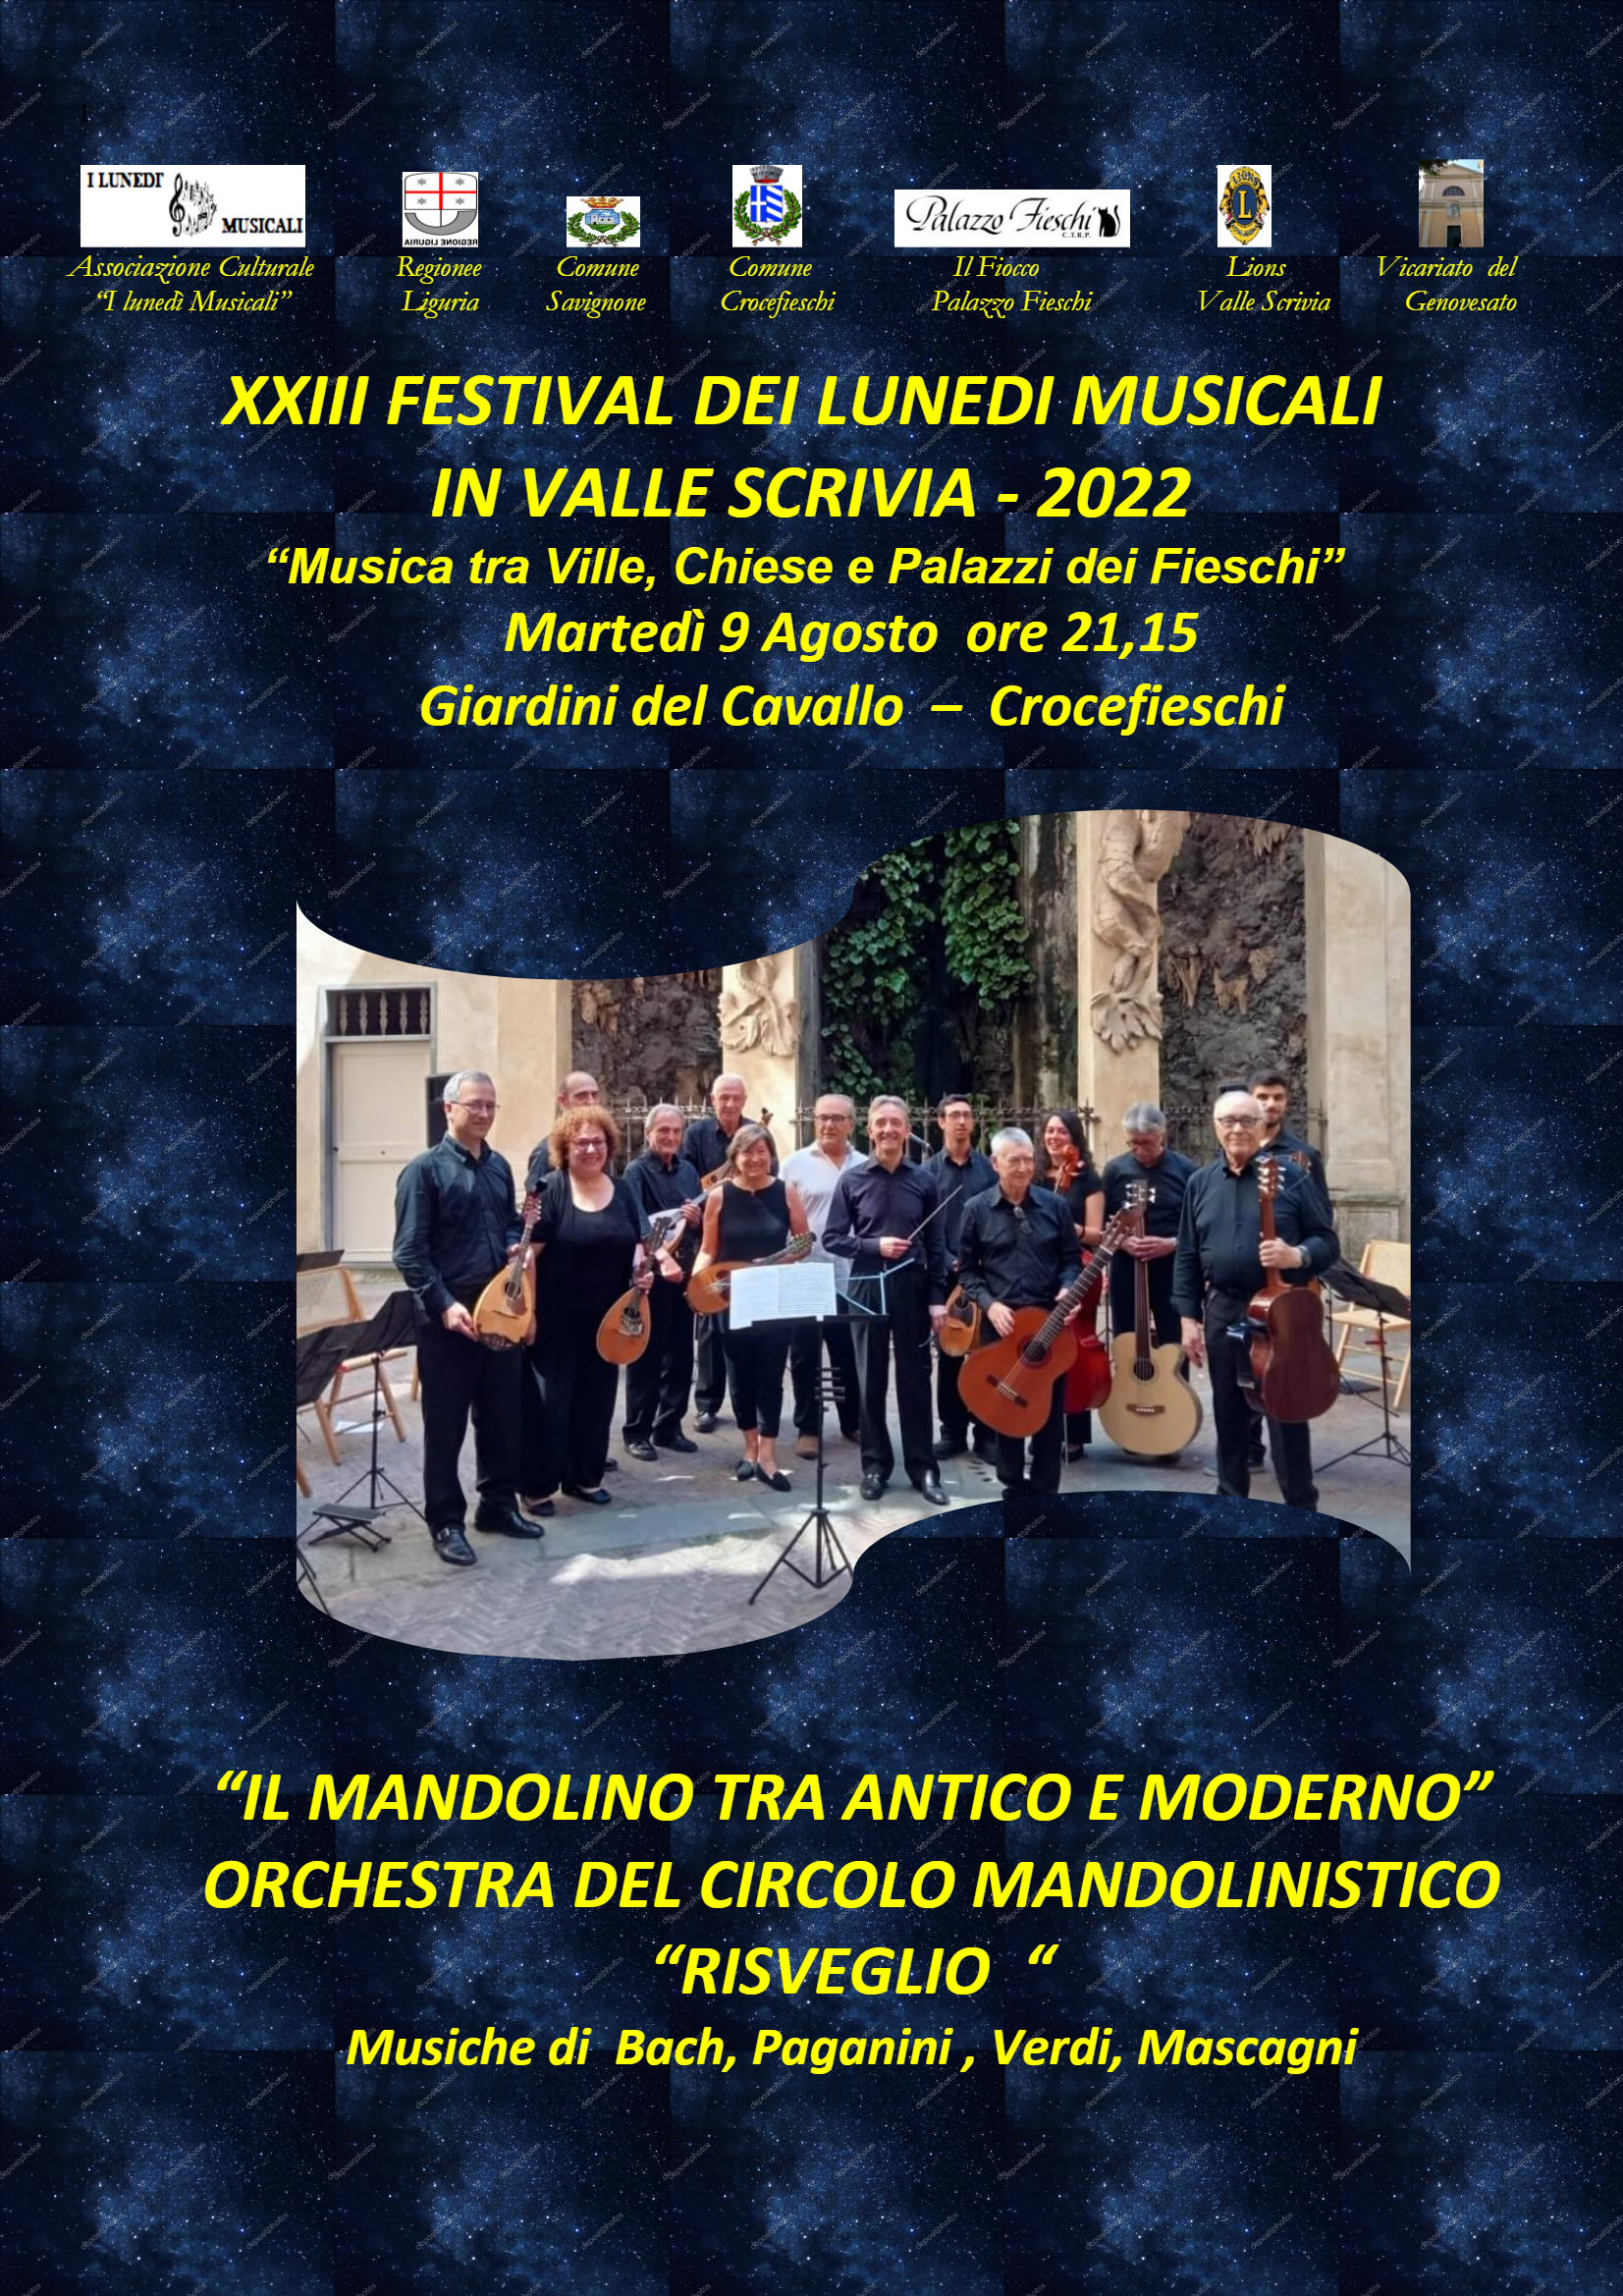 XXIII FESTIVAL IN VALLE SCRIVIA MUSICA TRA VILLE,CHIESE E PALAZZI